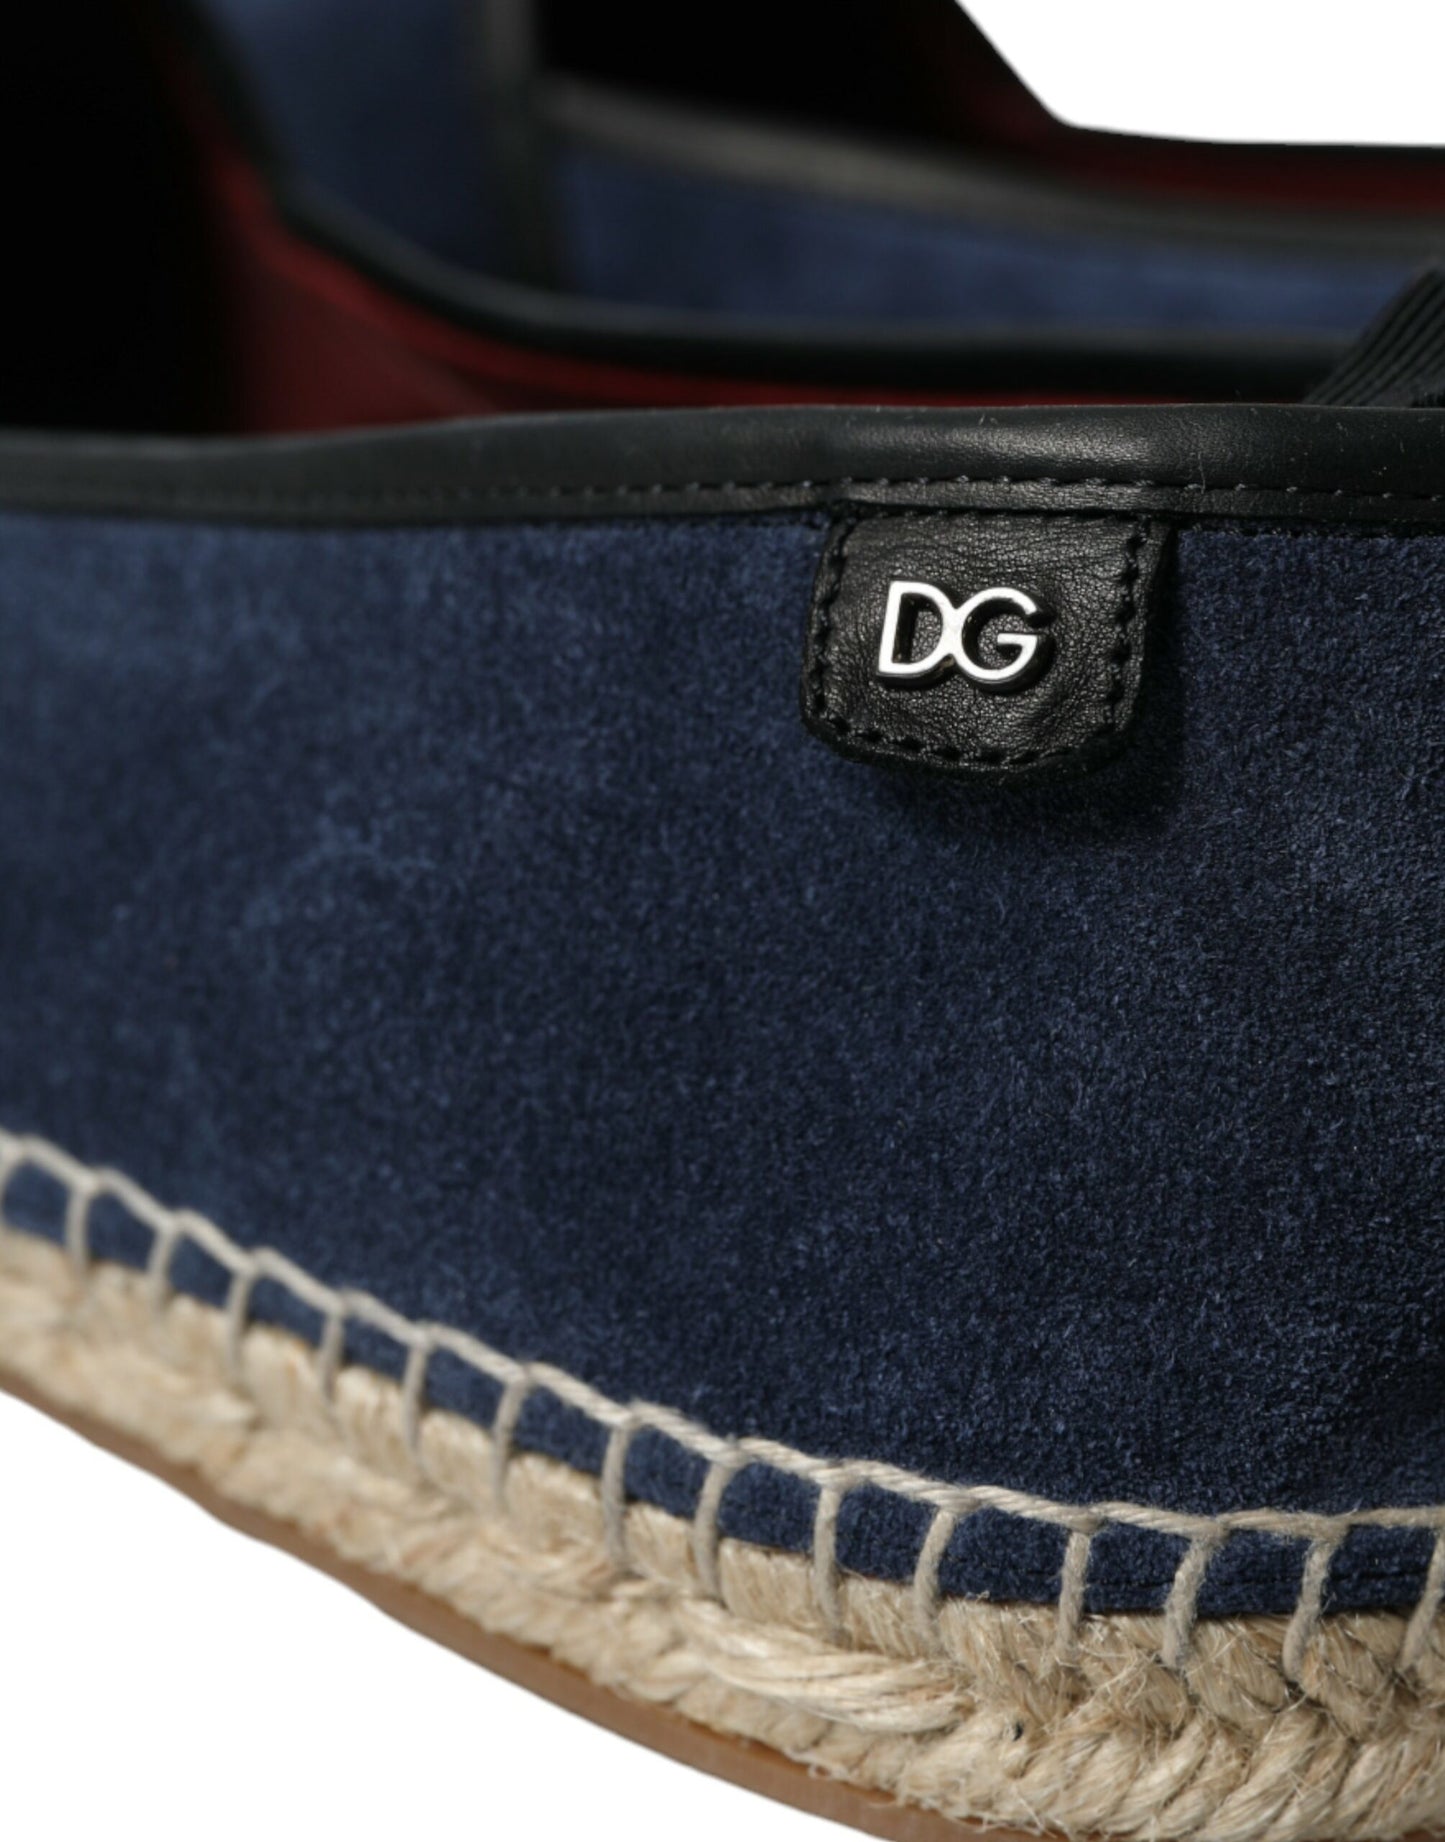 Fashionsarah.com Fashionsarah.com Dolce & Gabbana Blue Leather Suede Slip On Espadrille Shoes